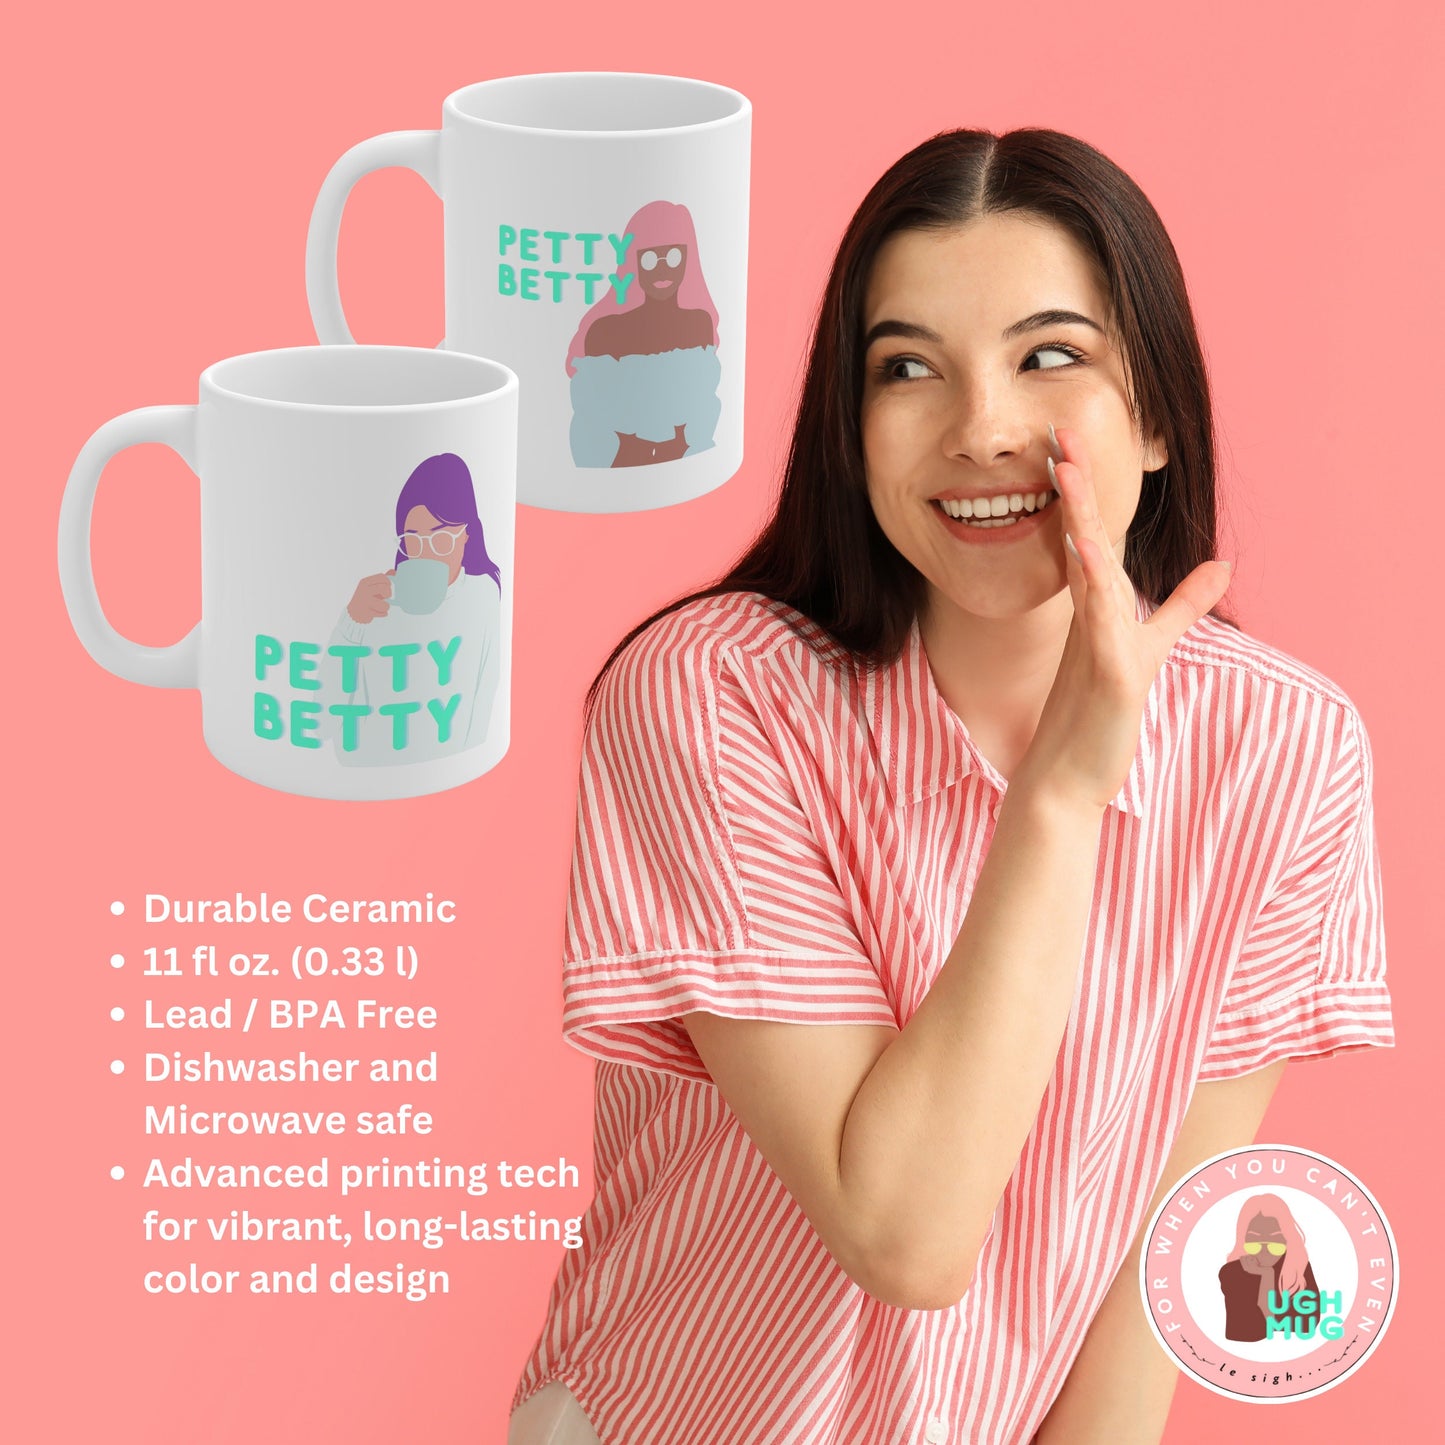 Petty Betty Bae Anti-Social Mug Gift Ugh As-If Mug Misanthropy People are here Mug Cool Girls Gossip Sister Gift Spill the Tea BFF Ugh Mug